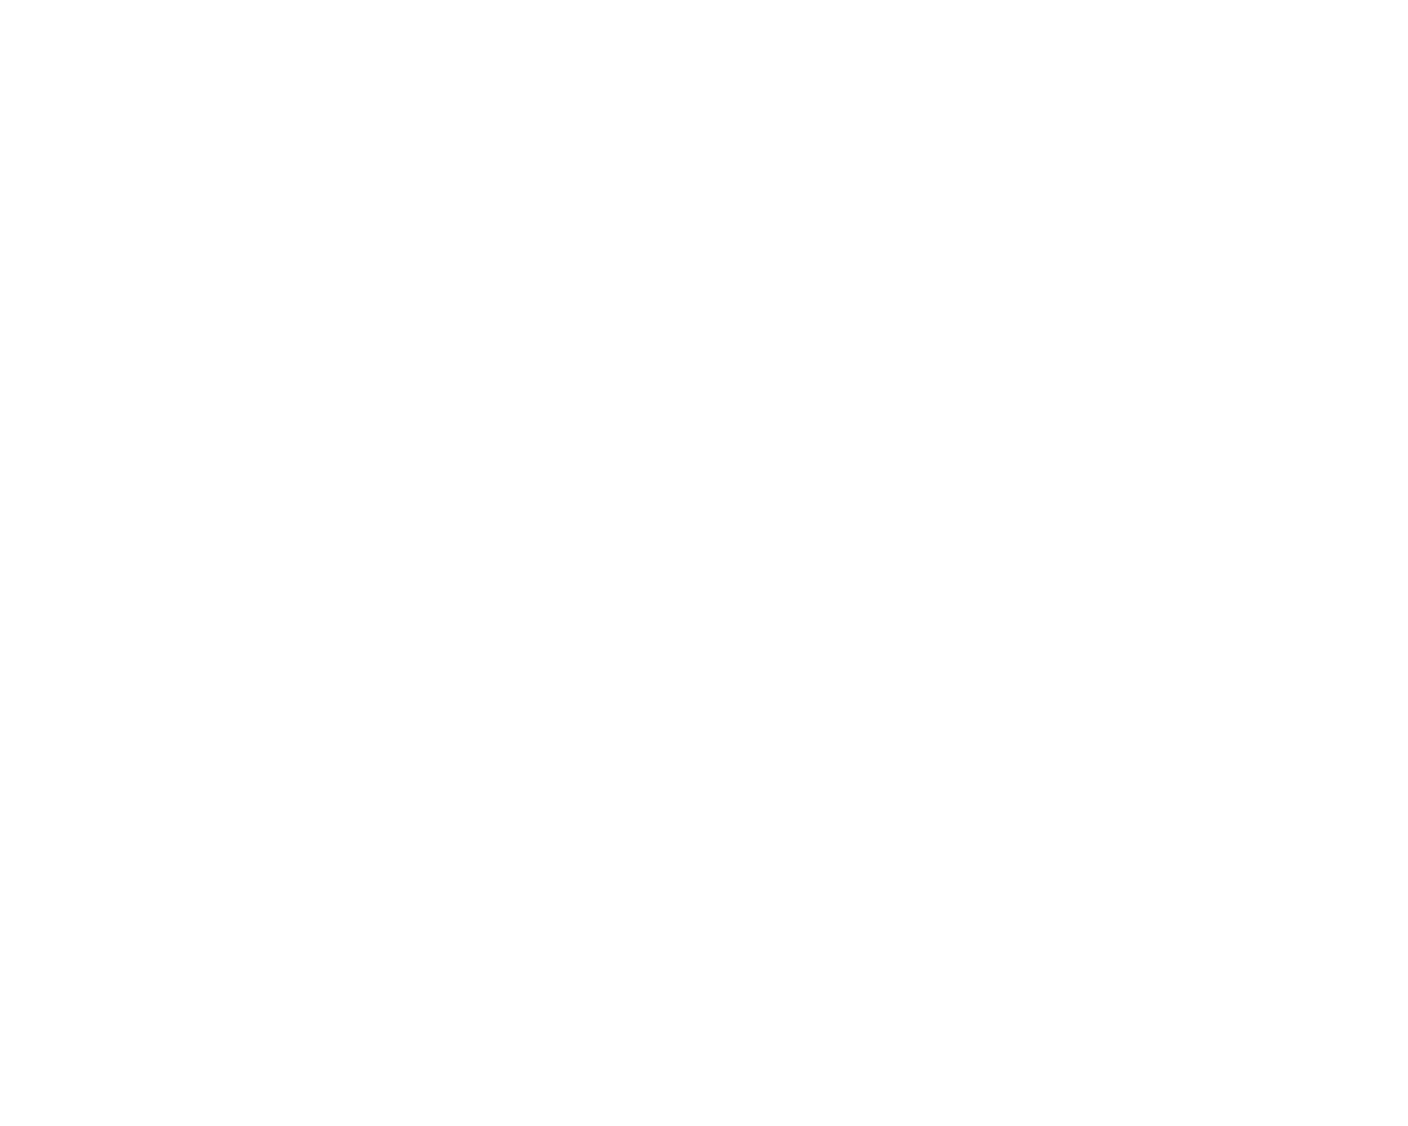 Columbia Gorge Perinatal Mental Health Initiative